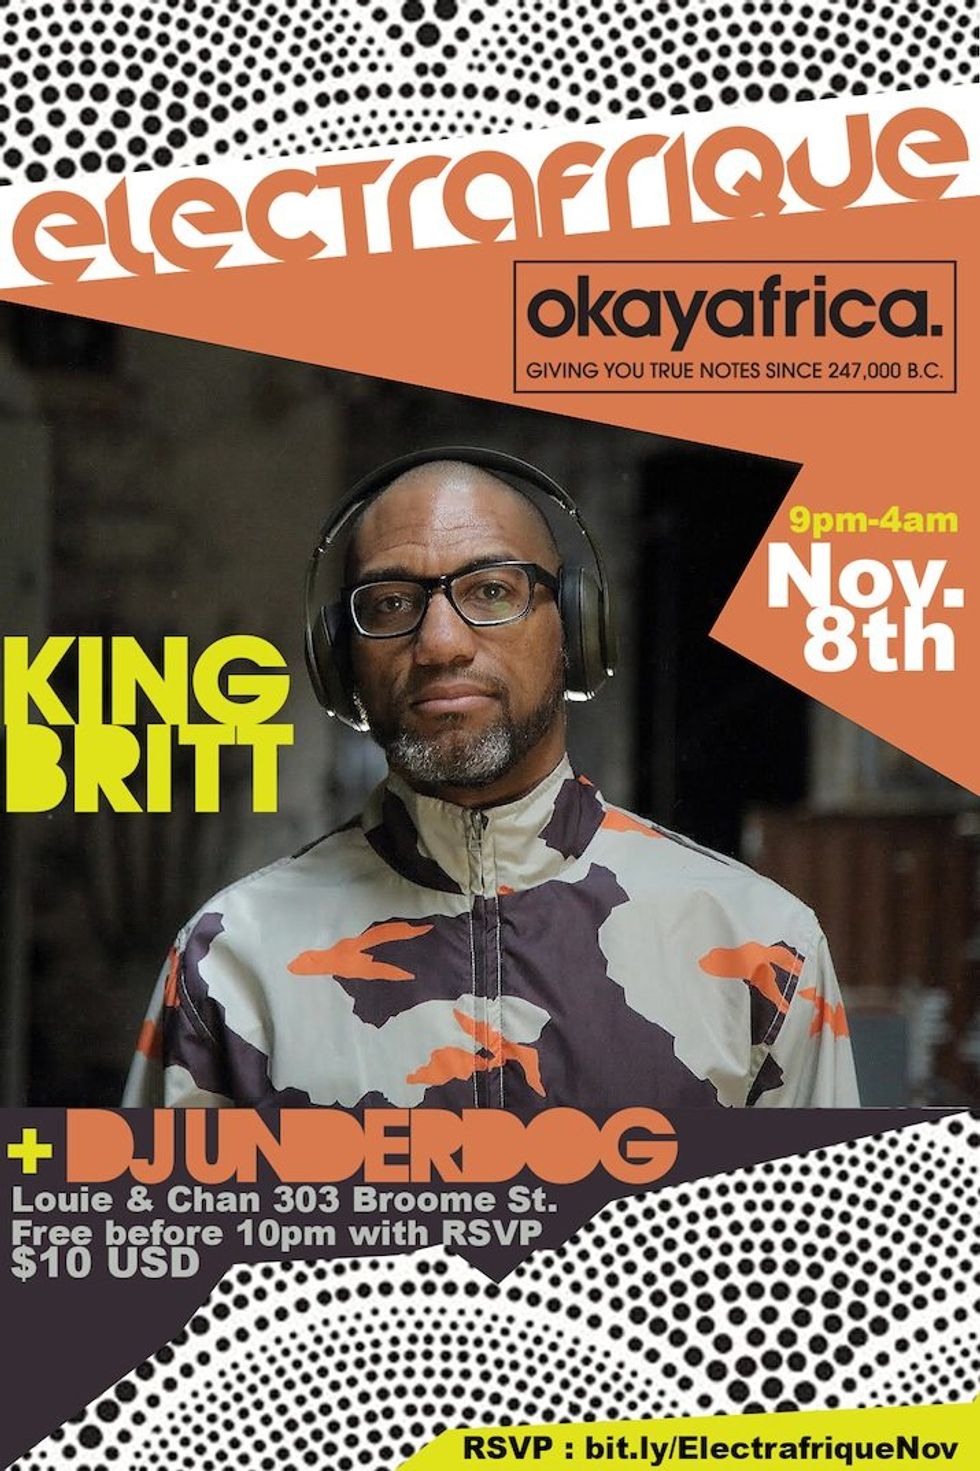 Okayafrica Electrafrique NYC with King Britt [11/8]!